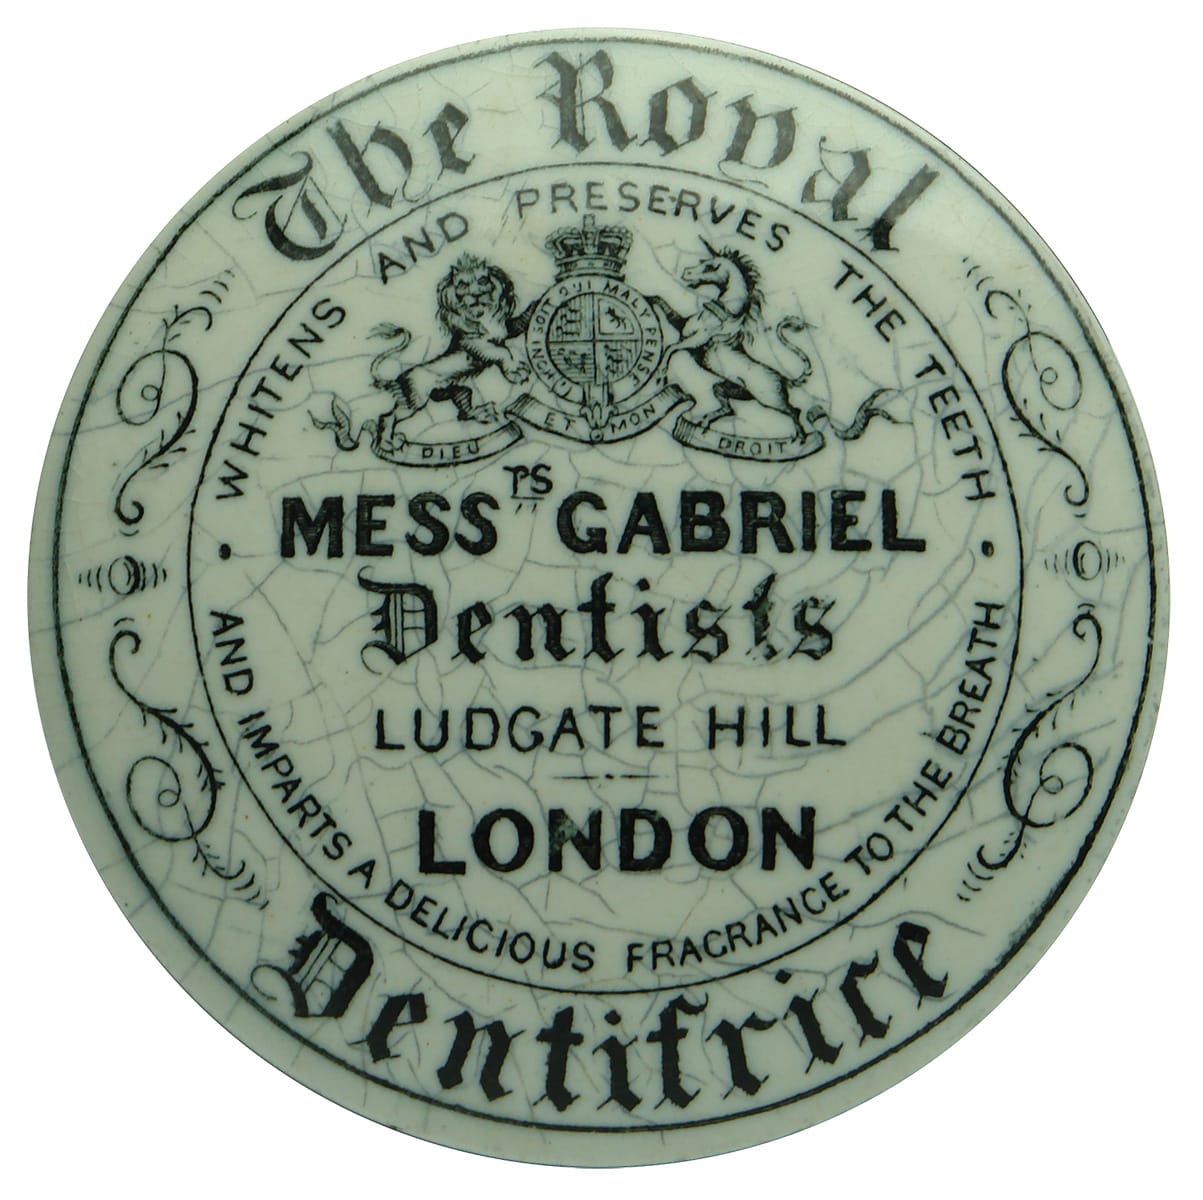 The Royal Dentifrice Gabriel Dentists Pot Lid